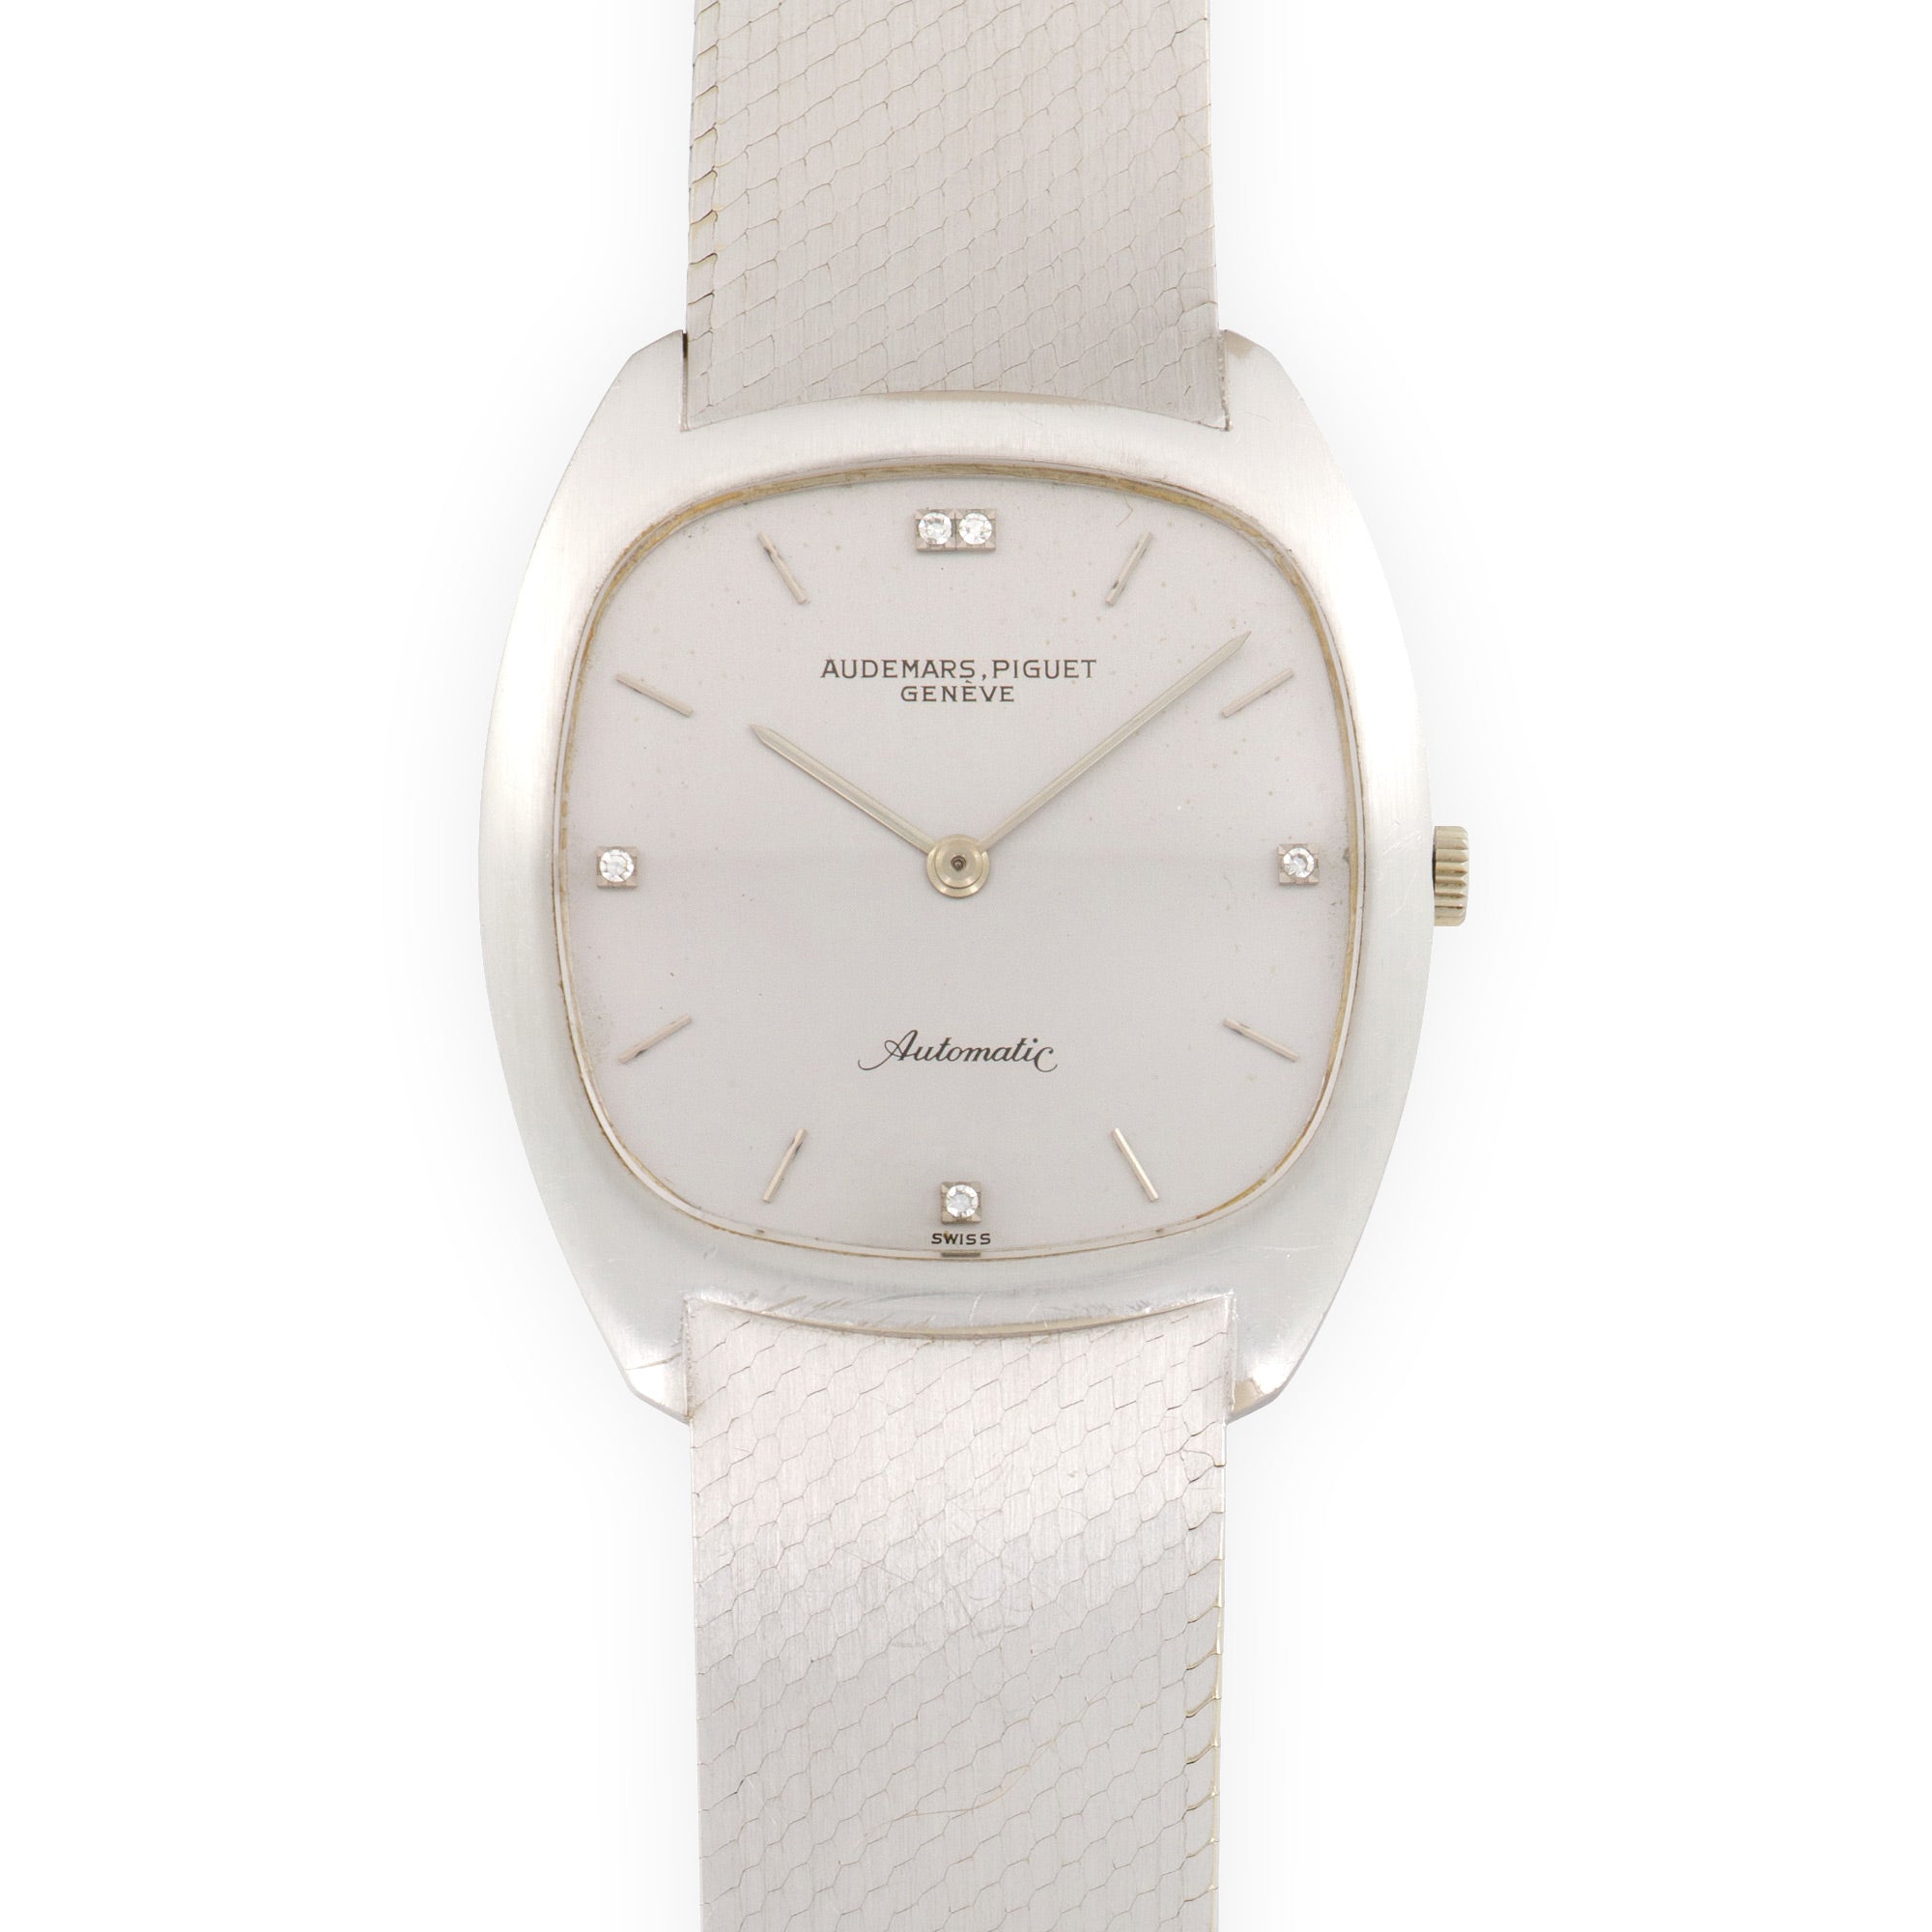 Audemars Piguet - Audemars Piguet White Gold Automatic Bracelet Watch - The Keystone Watches